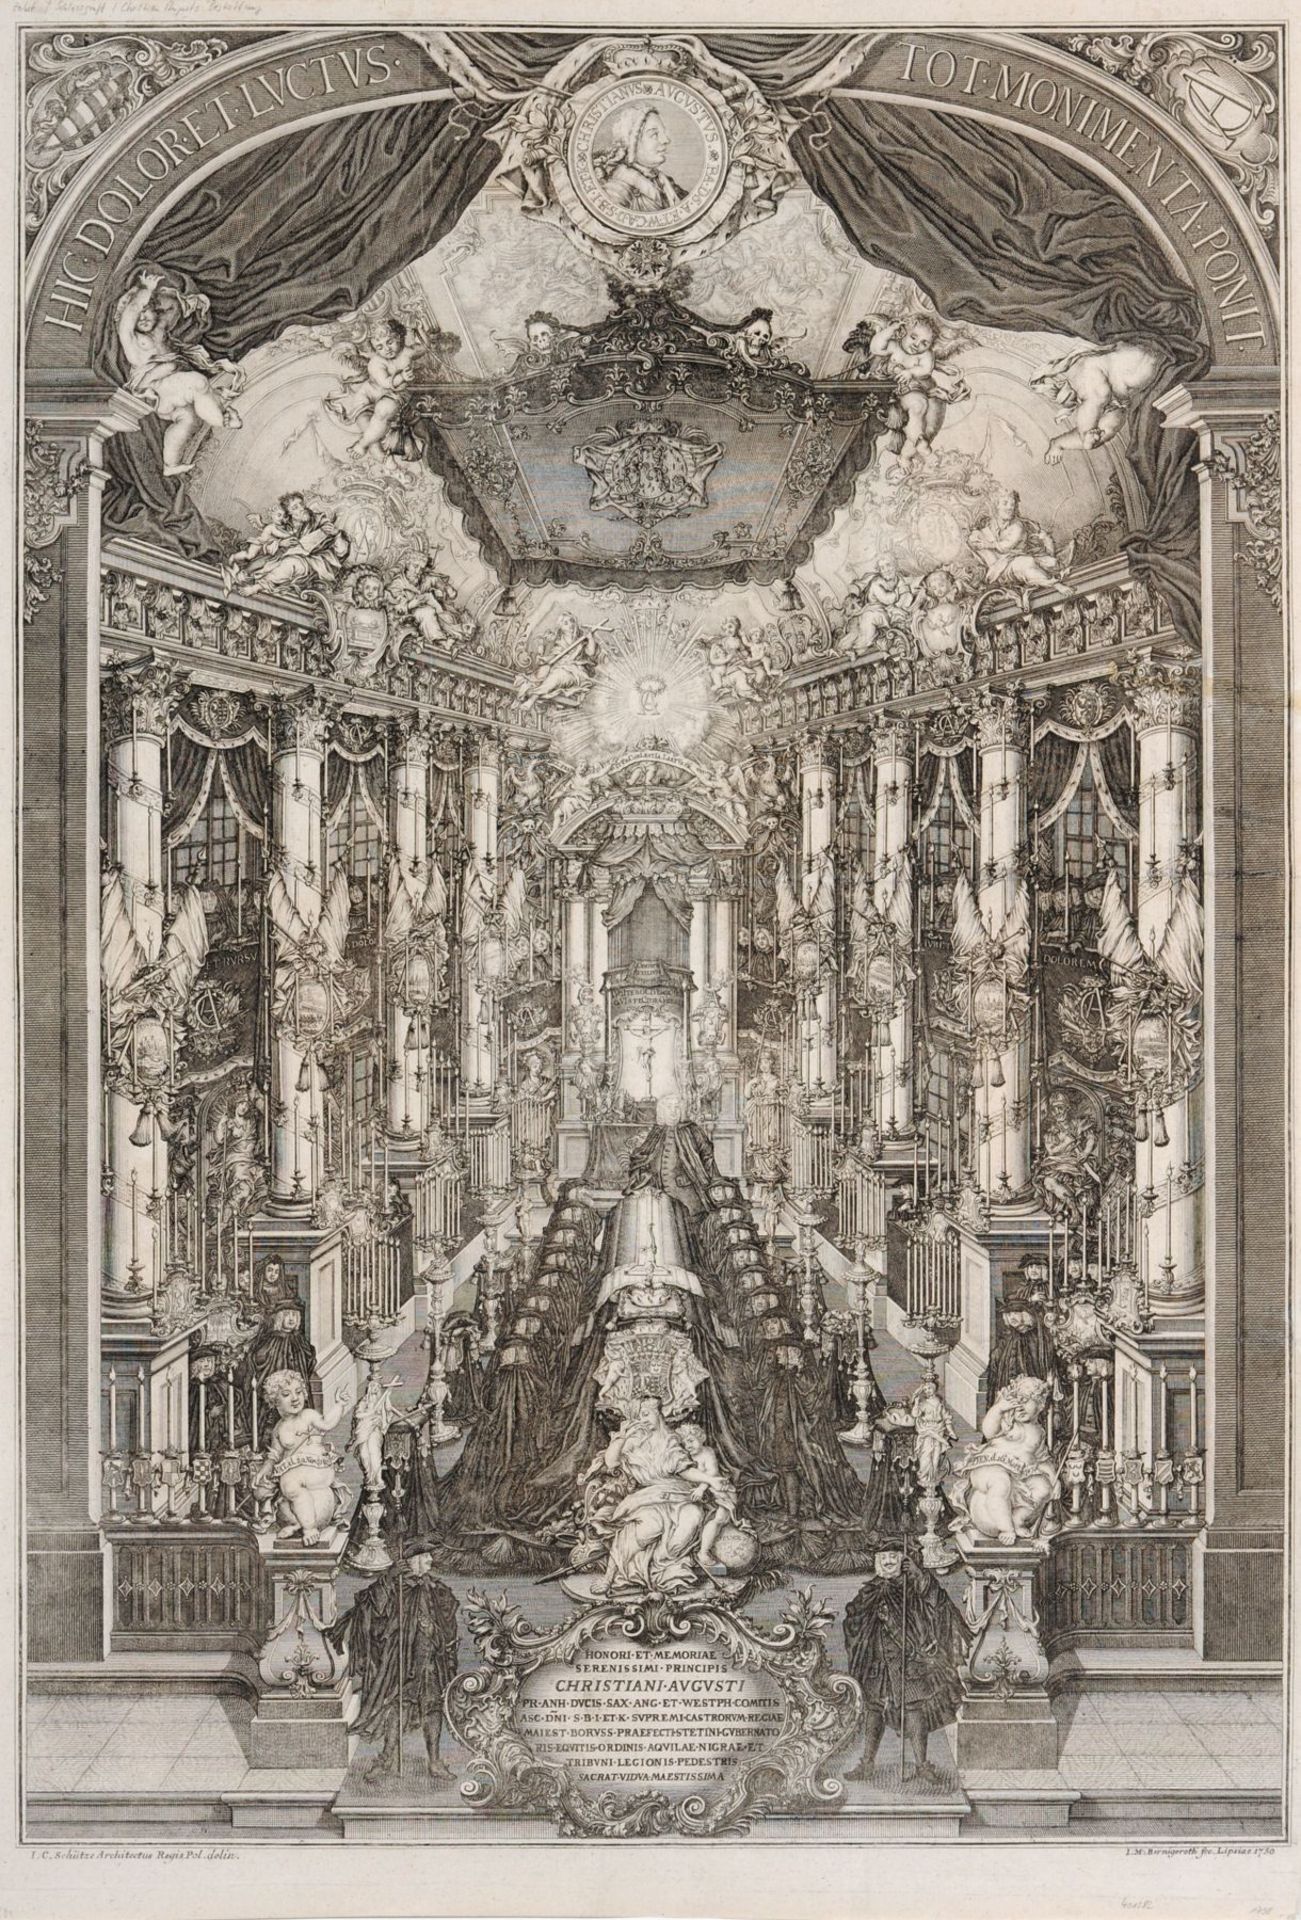 Johann Martin Bernigeroth "Honori et Memoriae Serenissimi Principis Christiani Augusti". 1750.